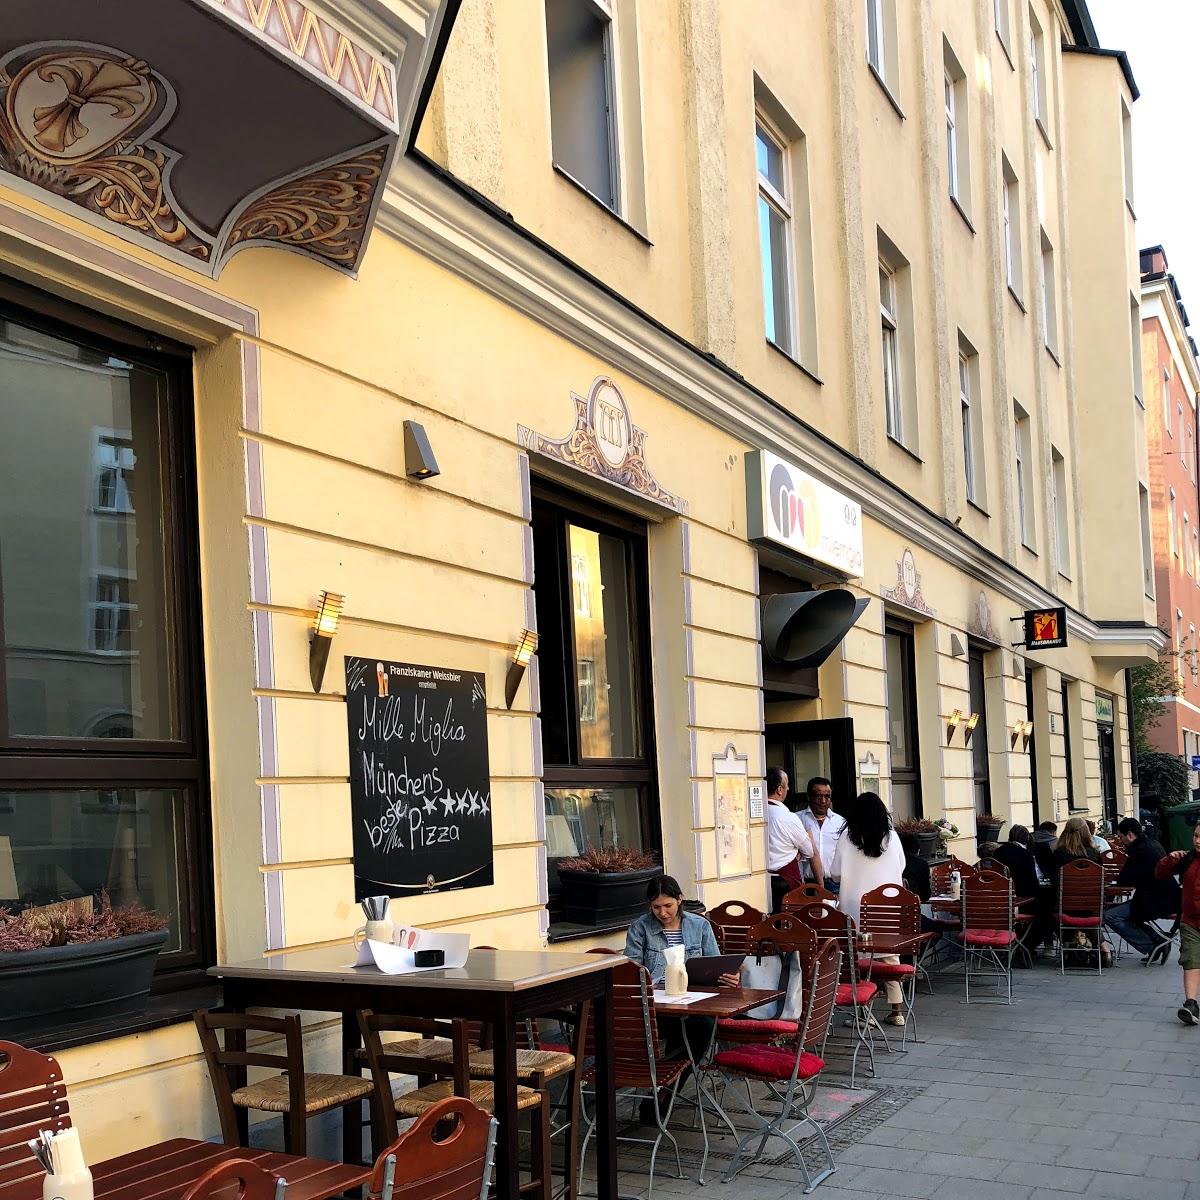 Restaurant "ROSSO MILLE MIGLIA" in München